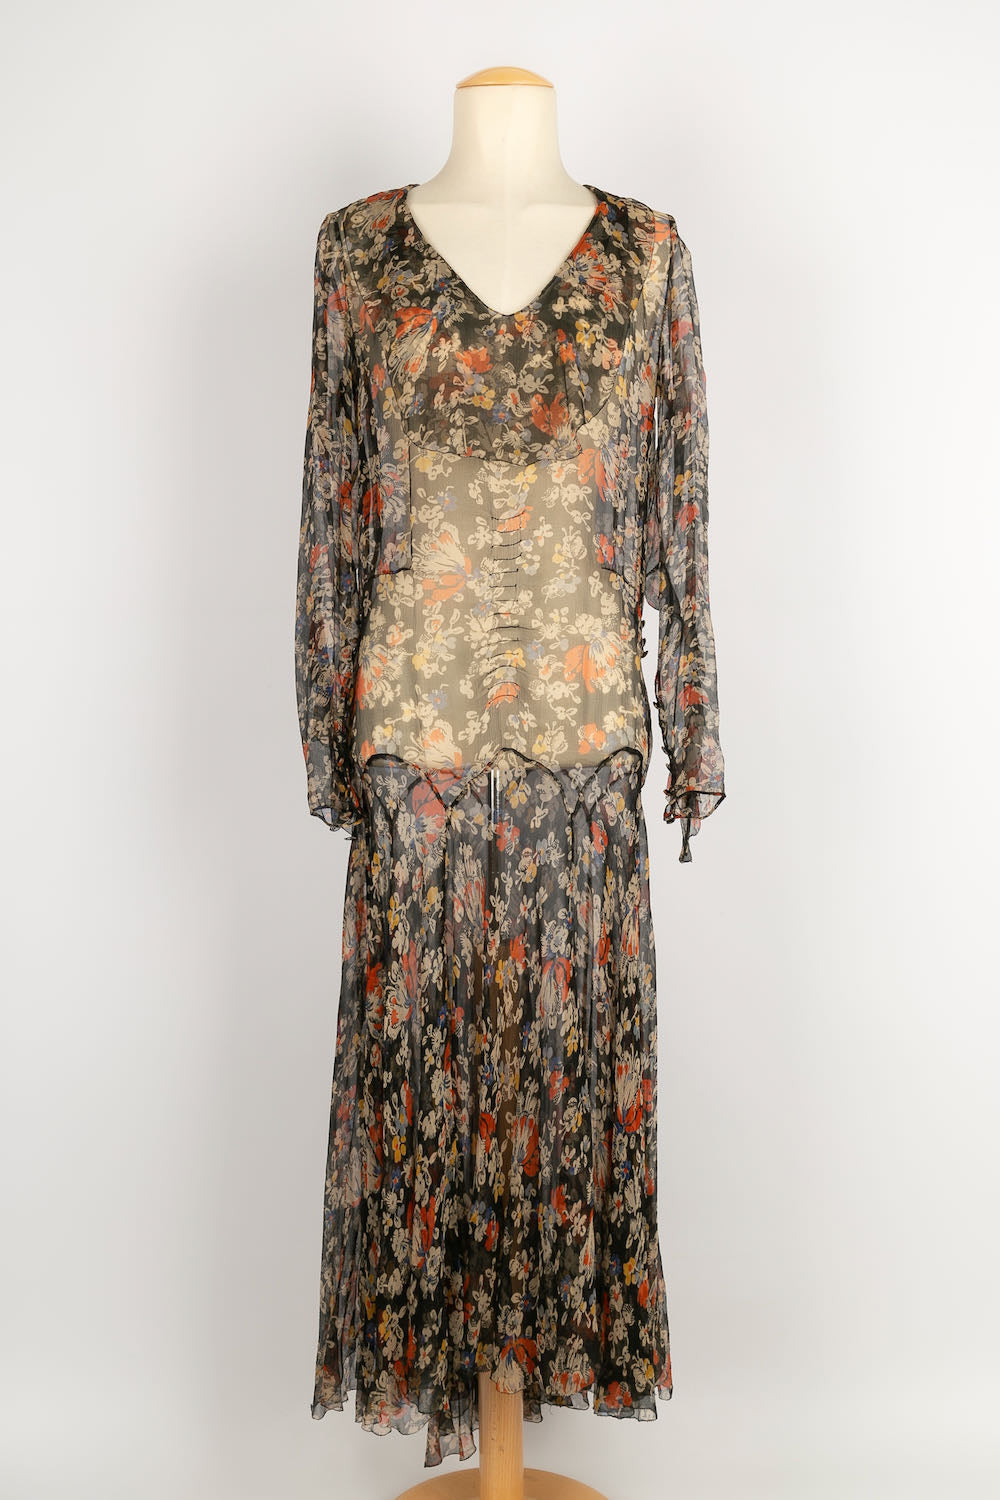 1930's dress